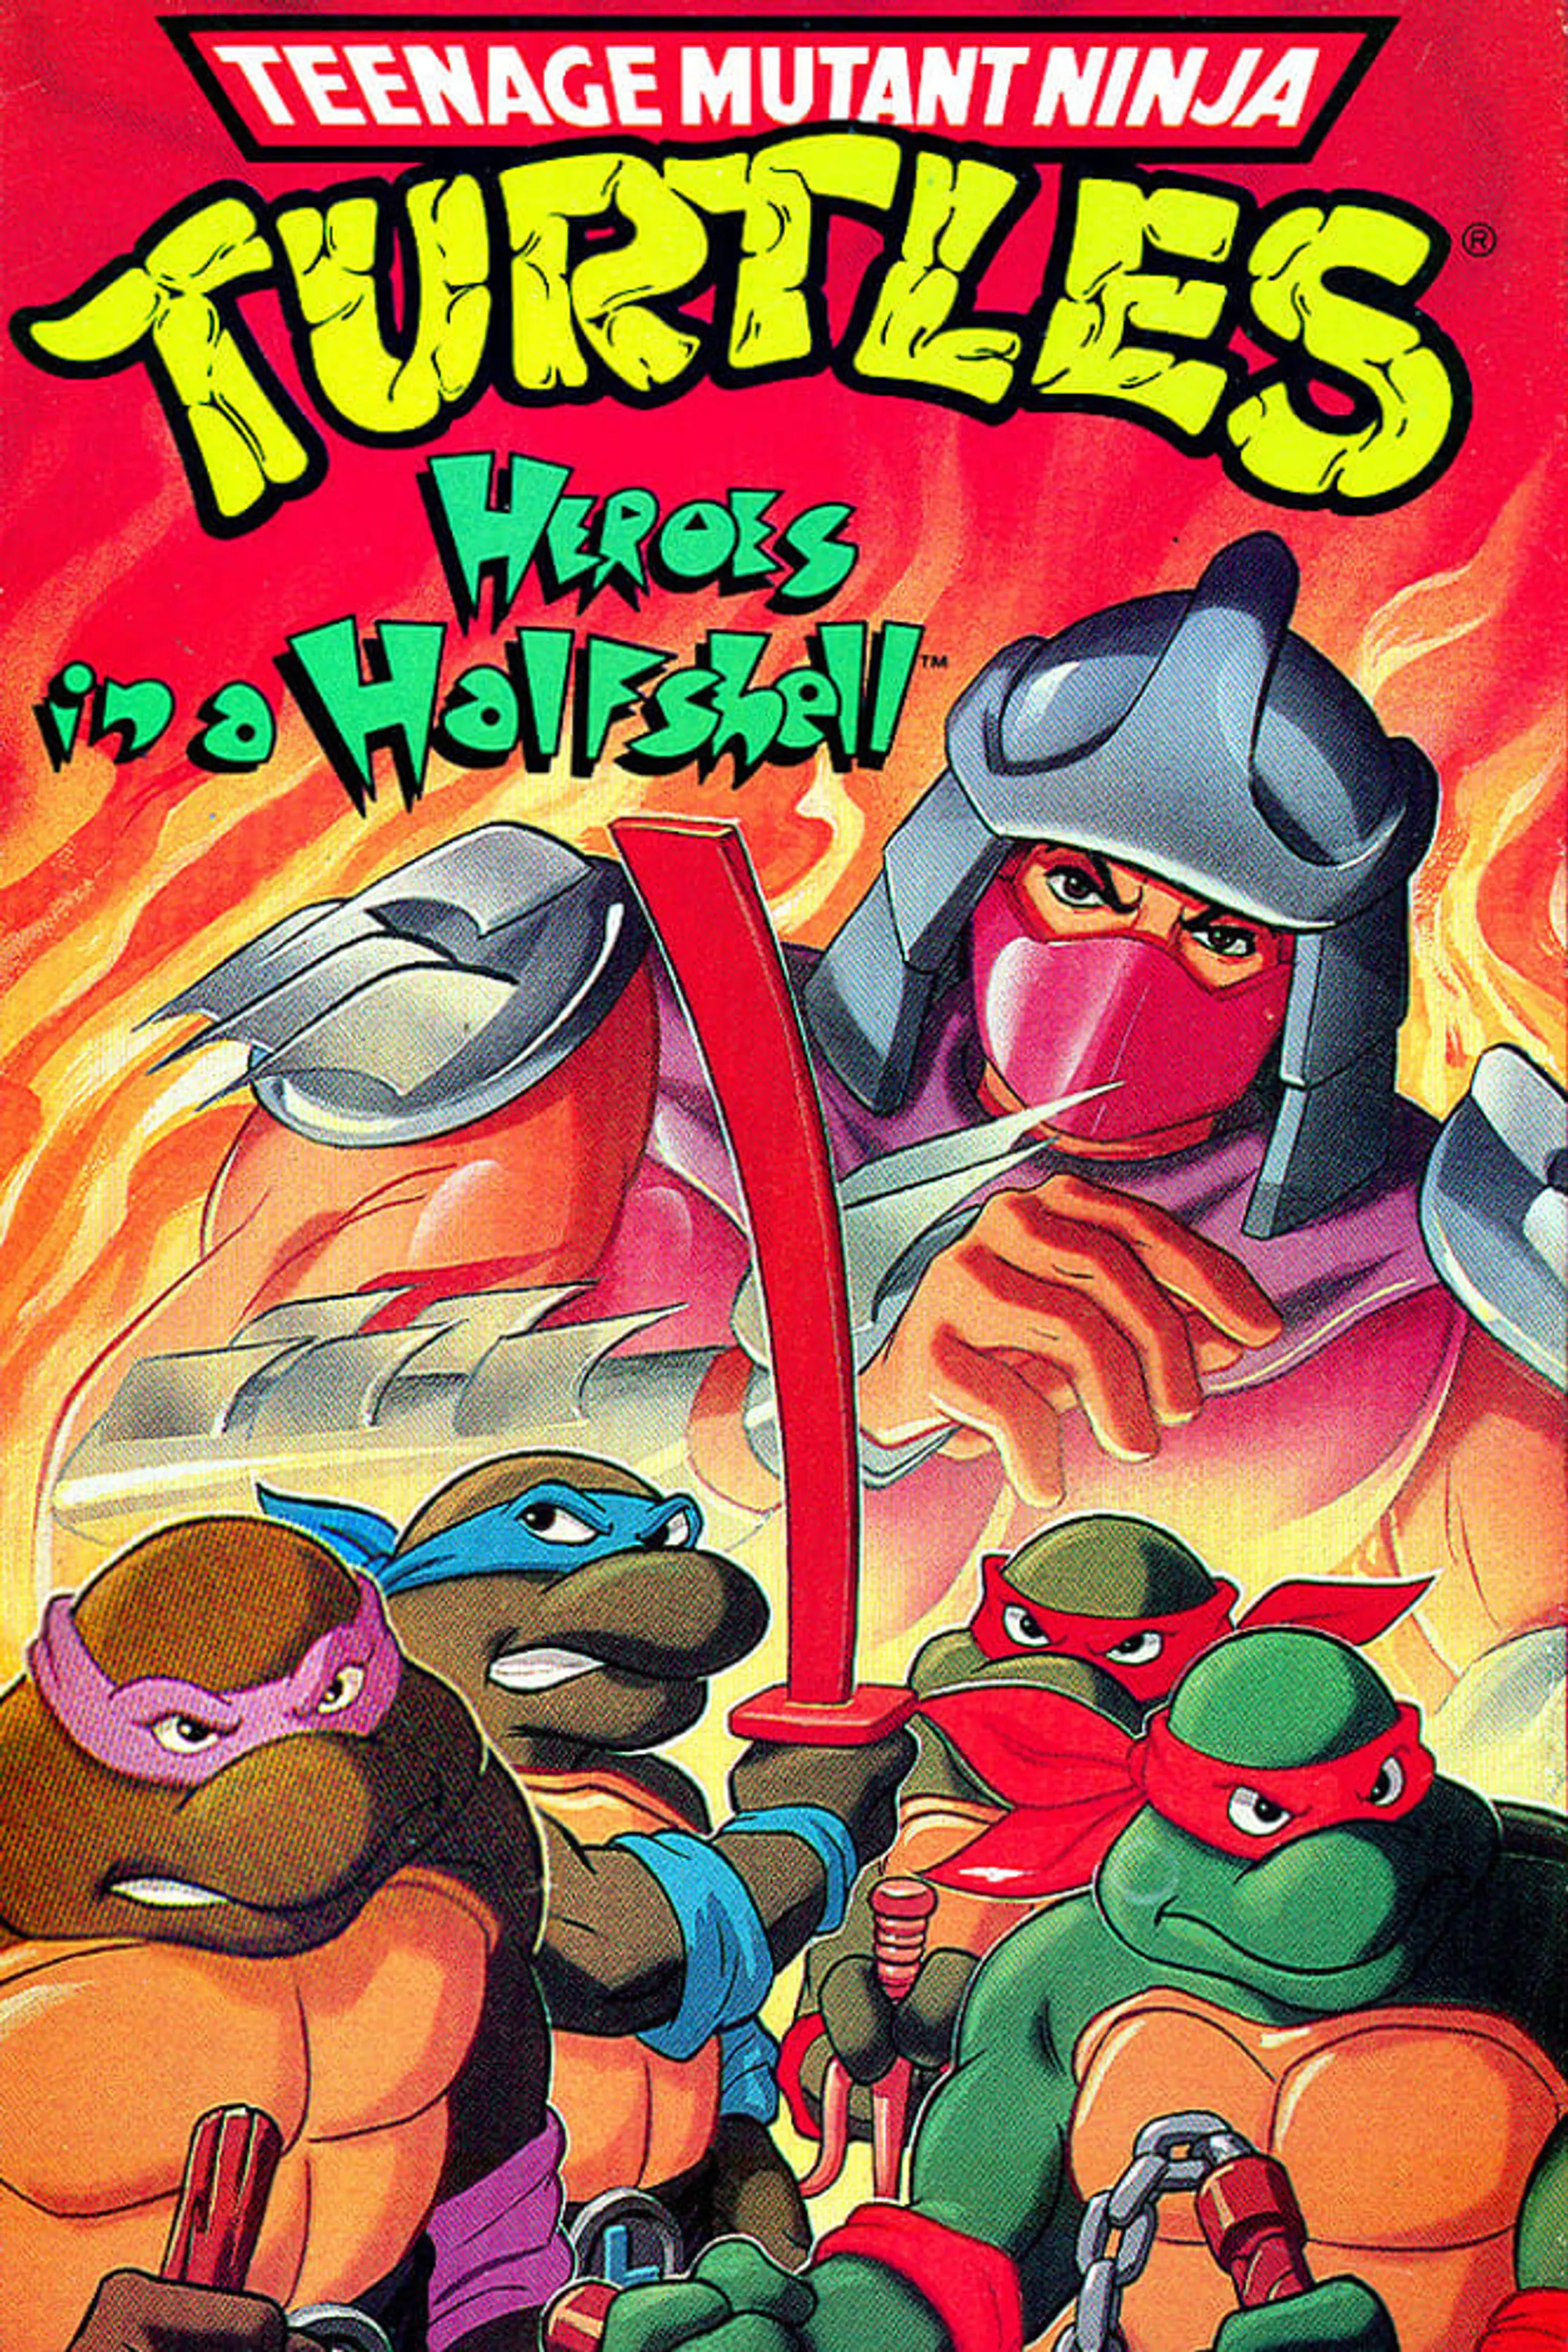 Teenage Mutant Ninja Turtles: Heroes in a Halfshell